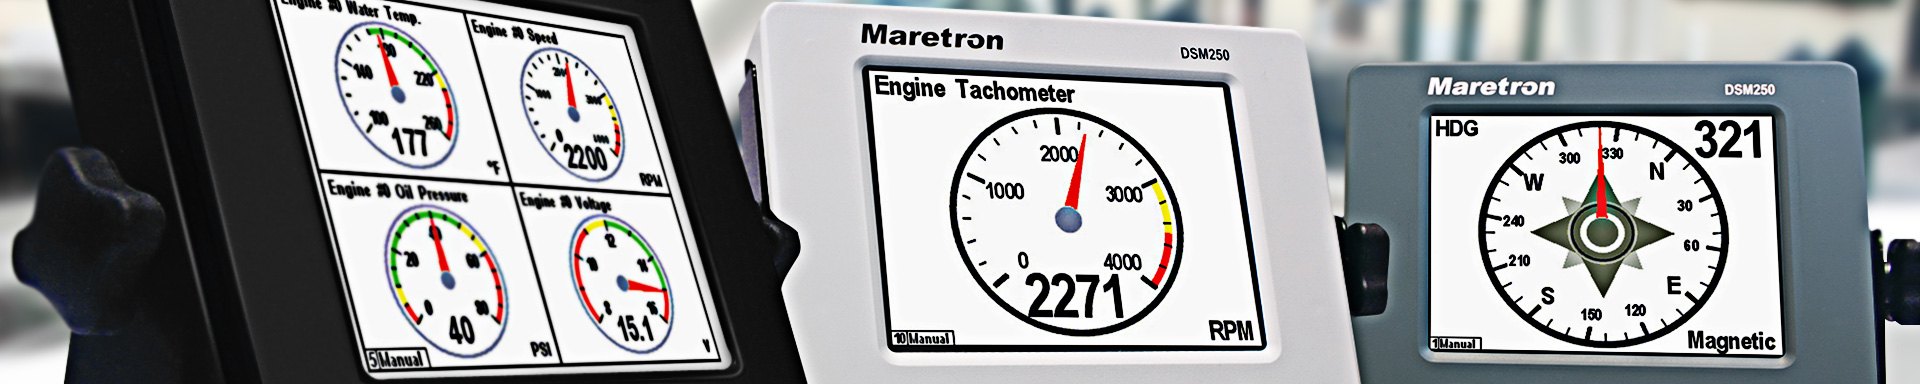 Maretron Boat Alarm Systems